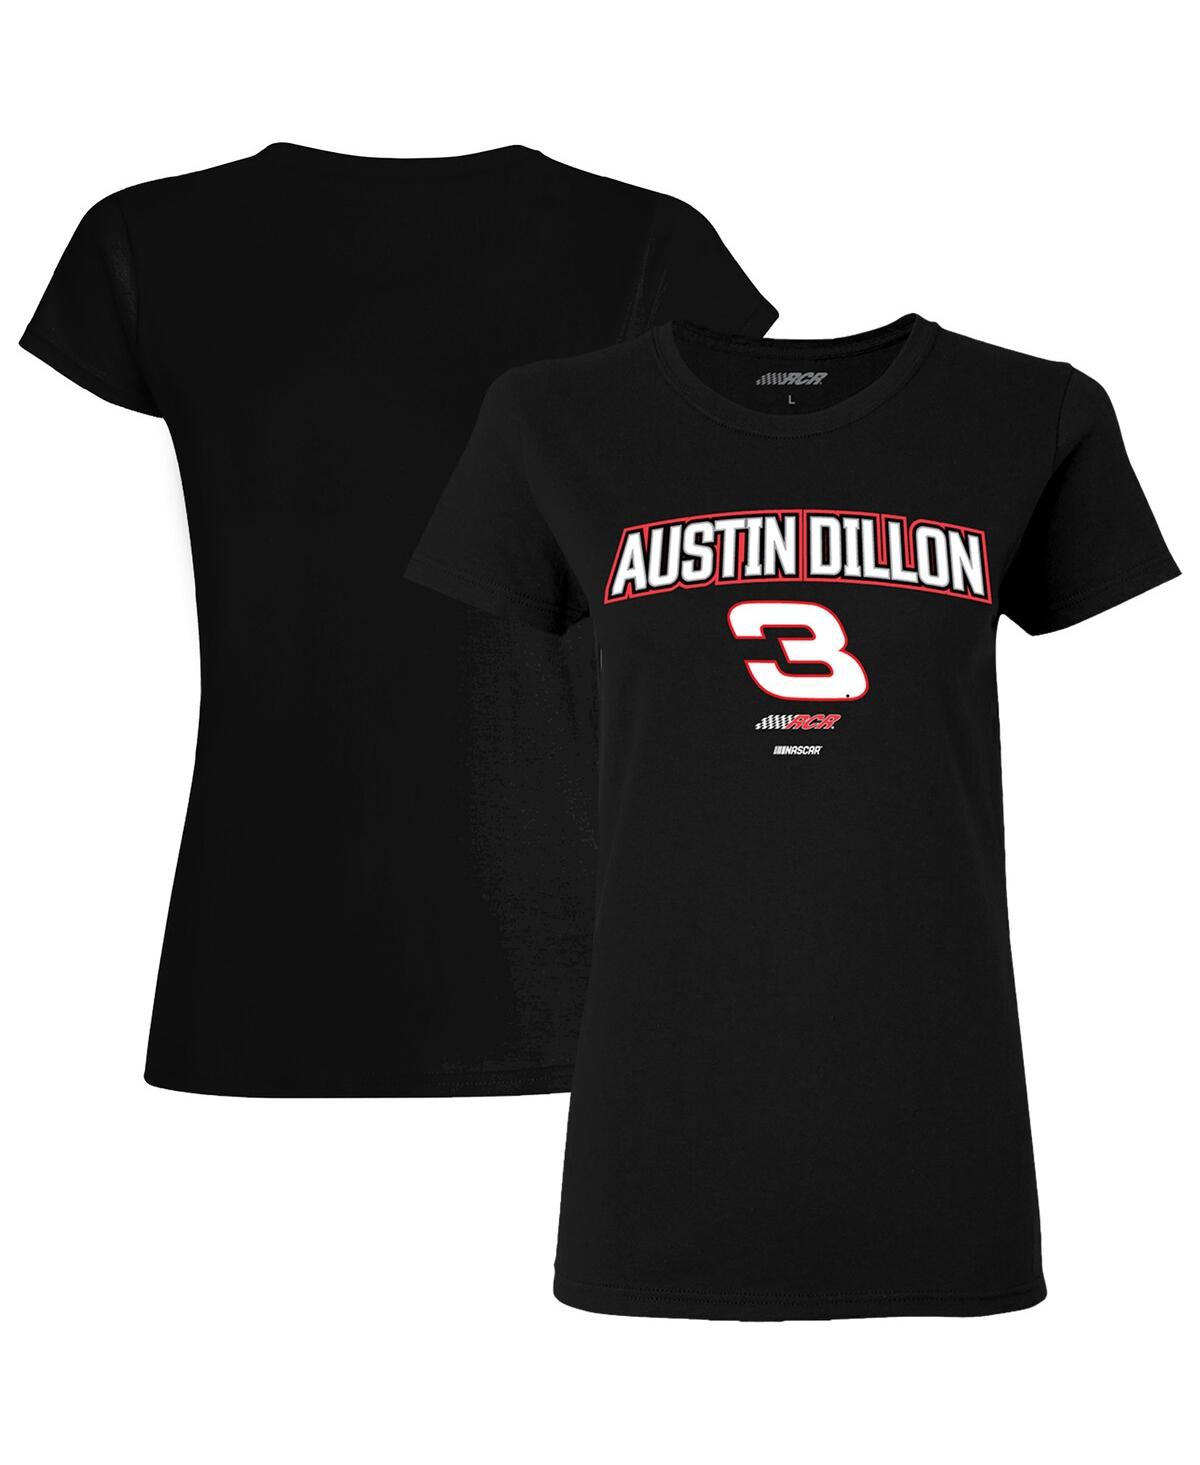 Women's Richard Childress Racing Team Collection Black Austin Dillon Car T-shirt - Black